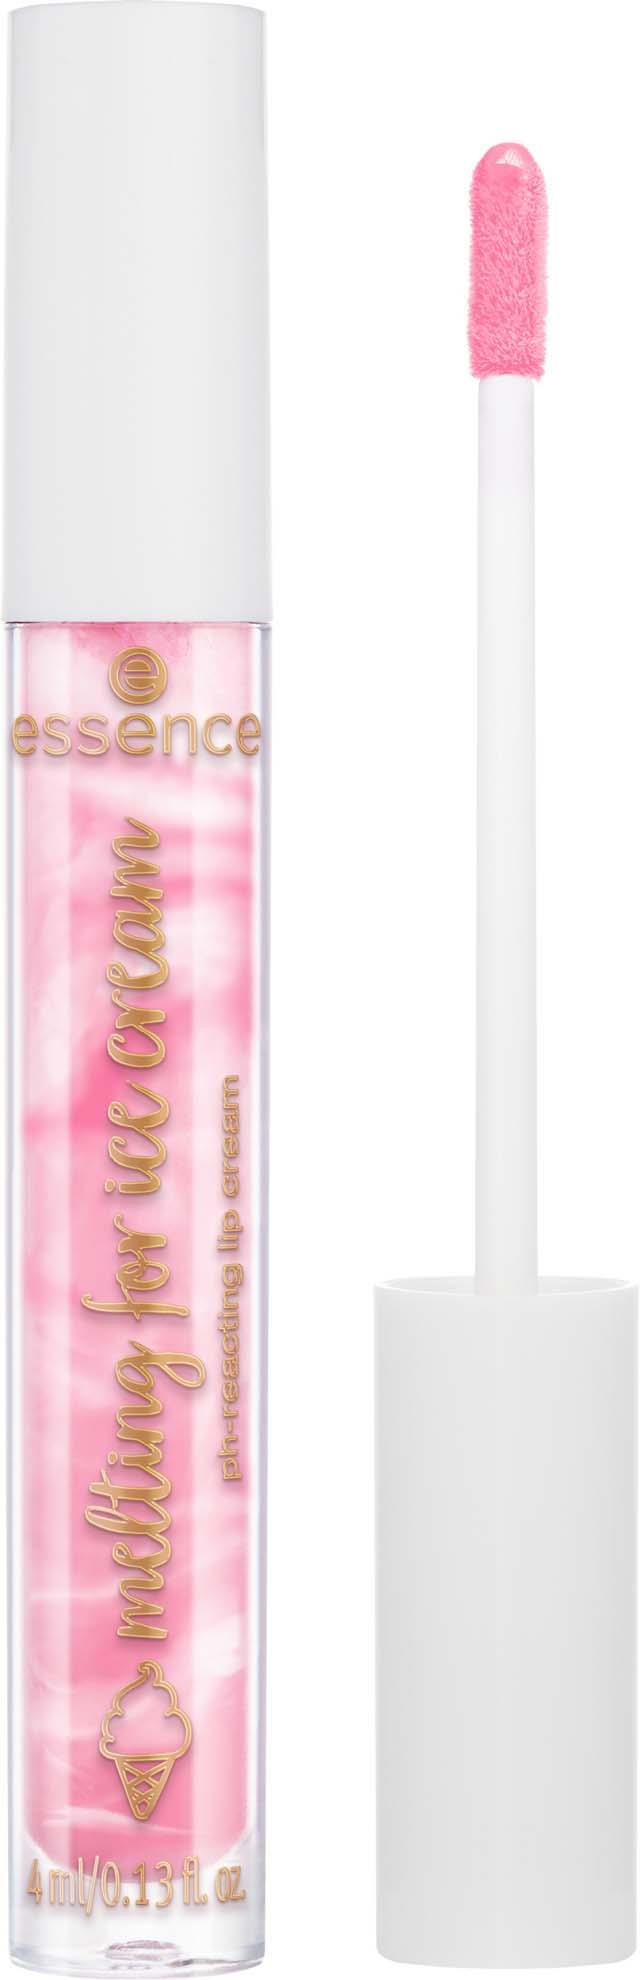 essence Melting For Ice Cream Ph-Reacting Lip Cream 02 Soft, Sweet & Creamy